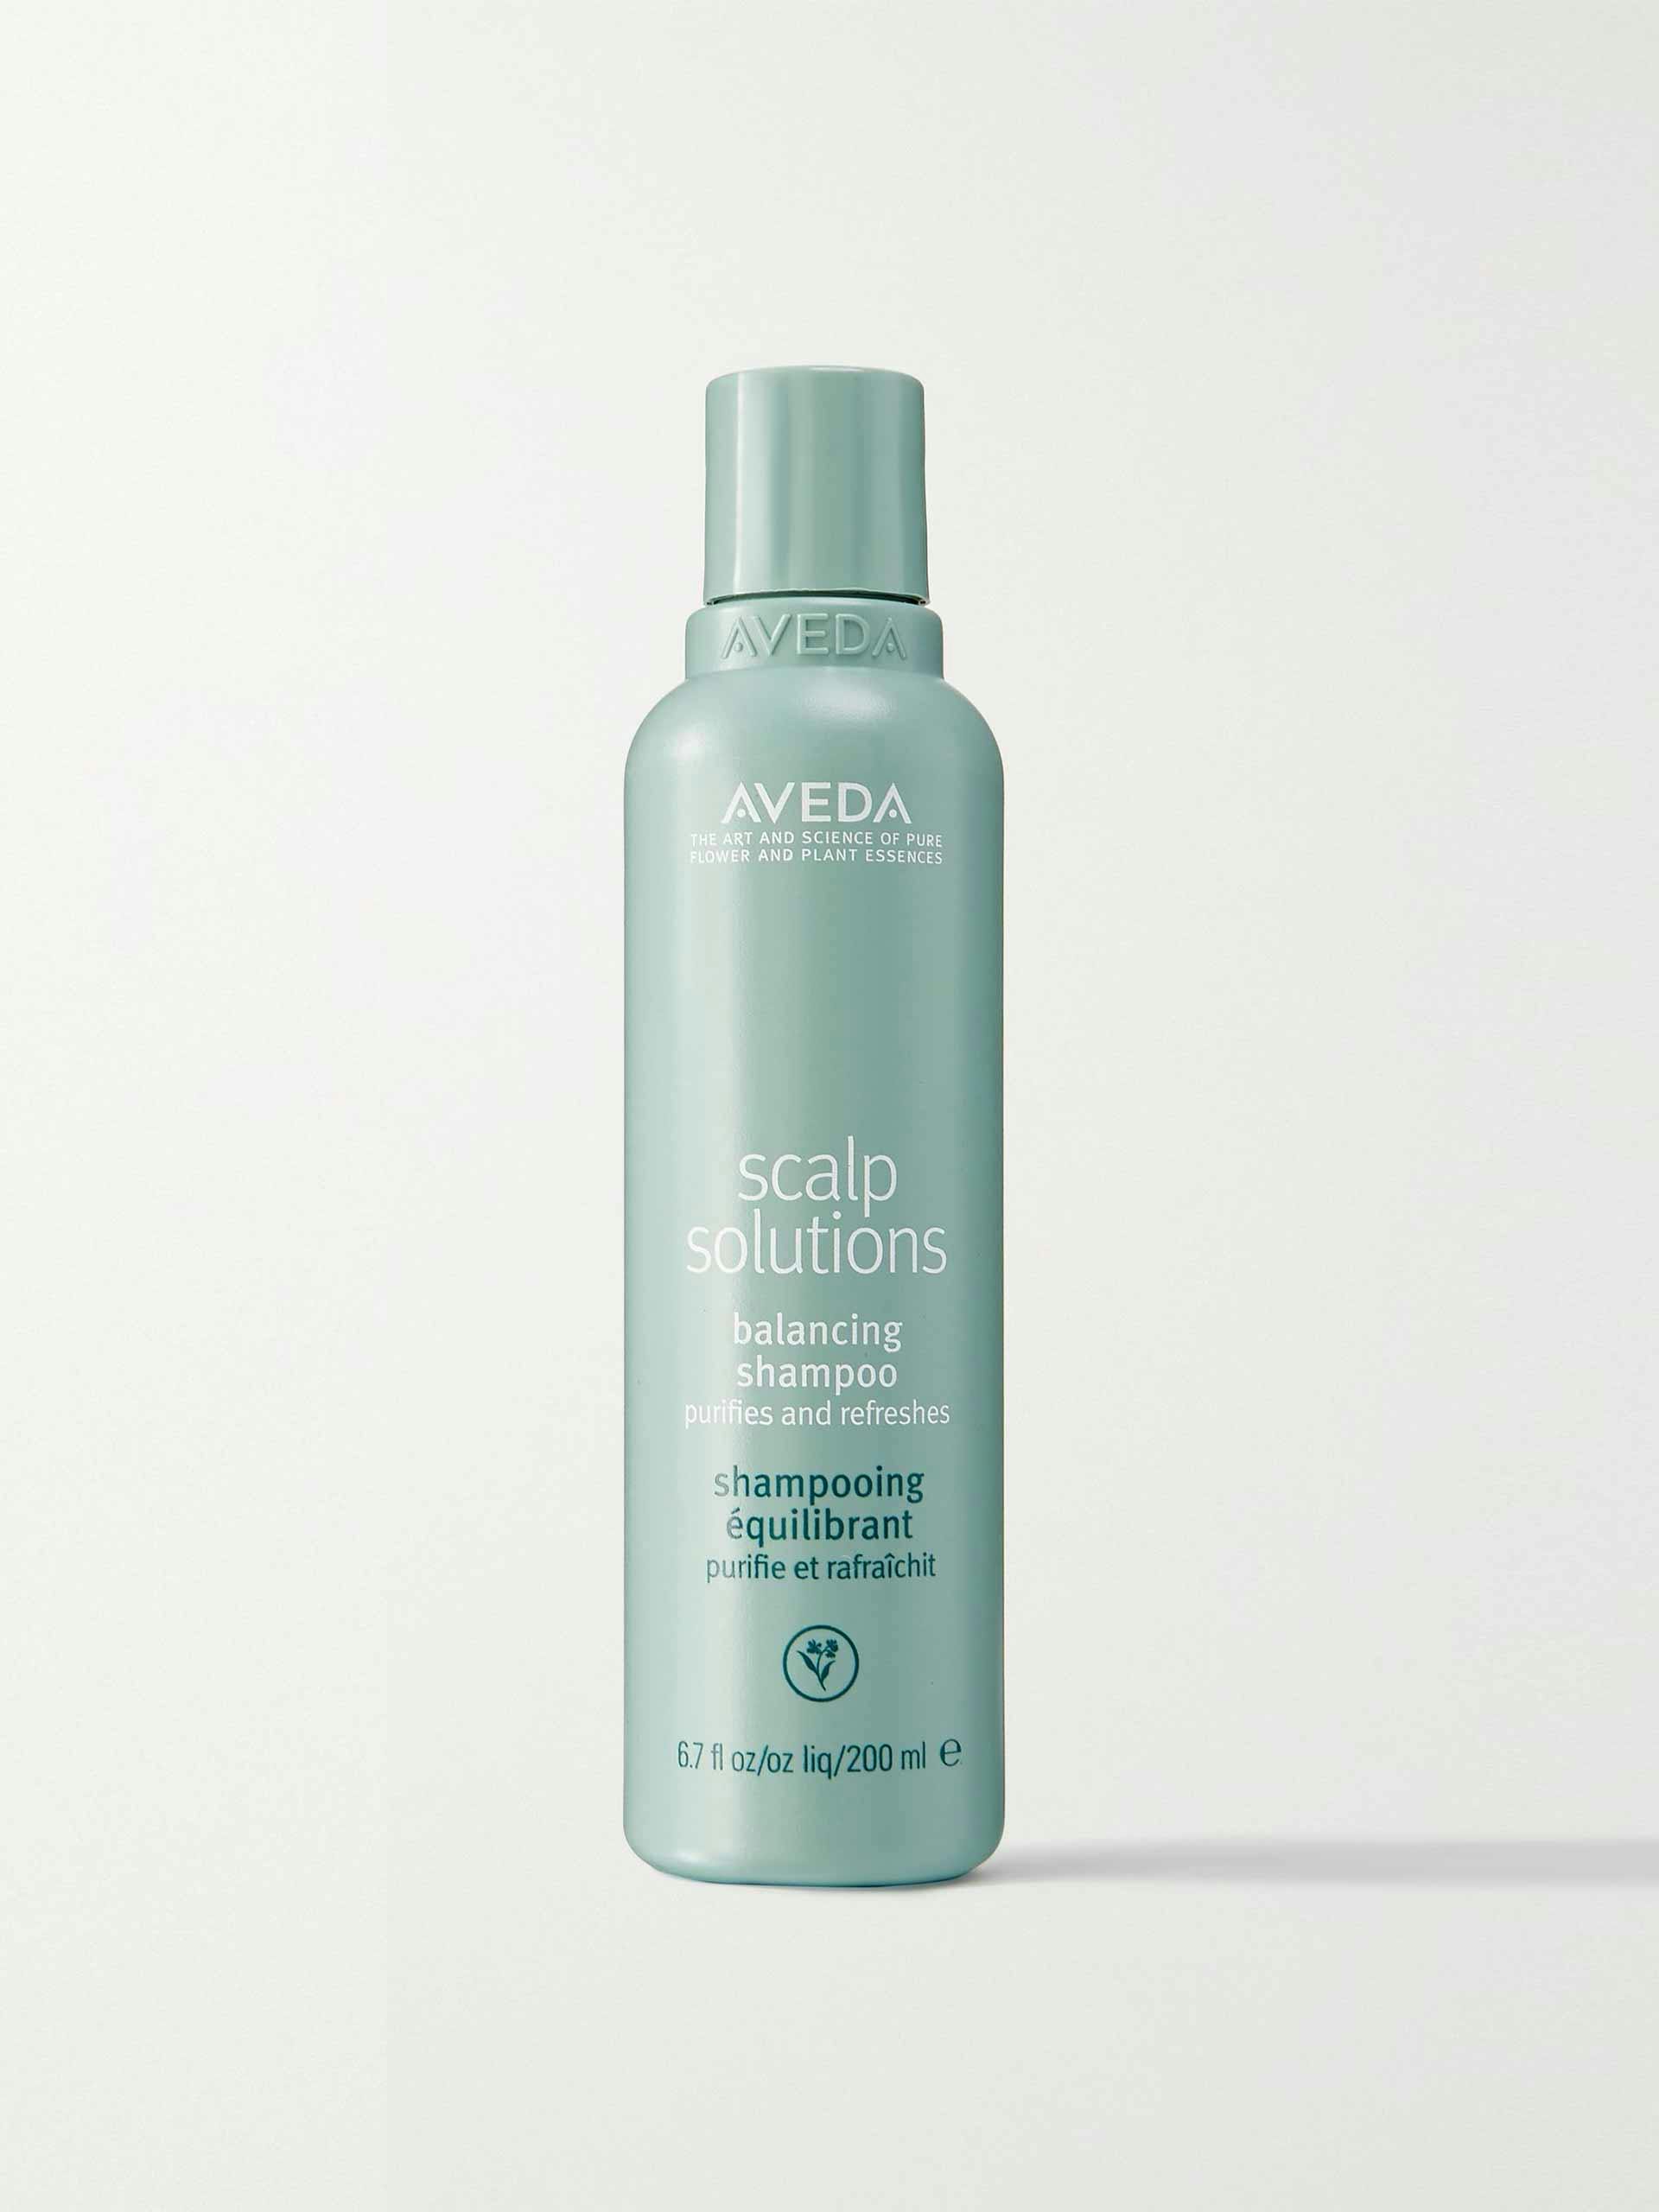 Scalp solutions balancing shampoo